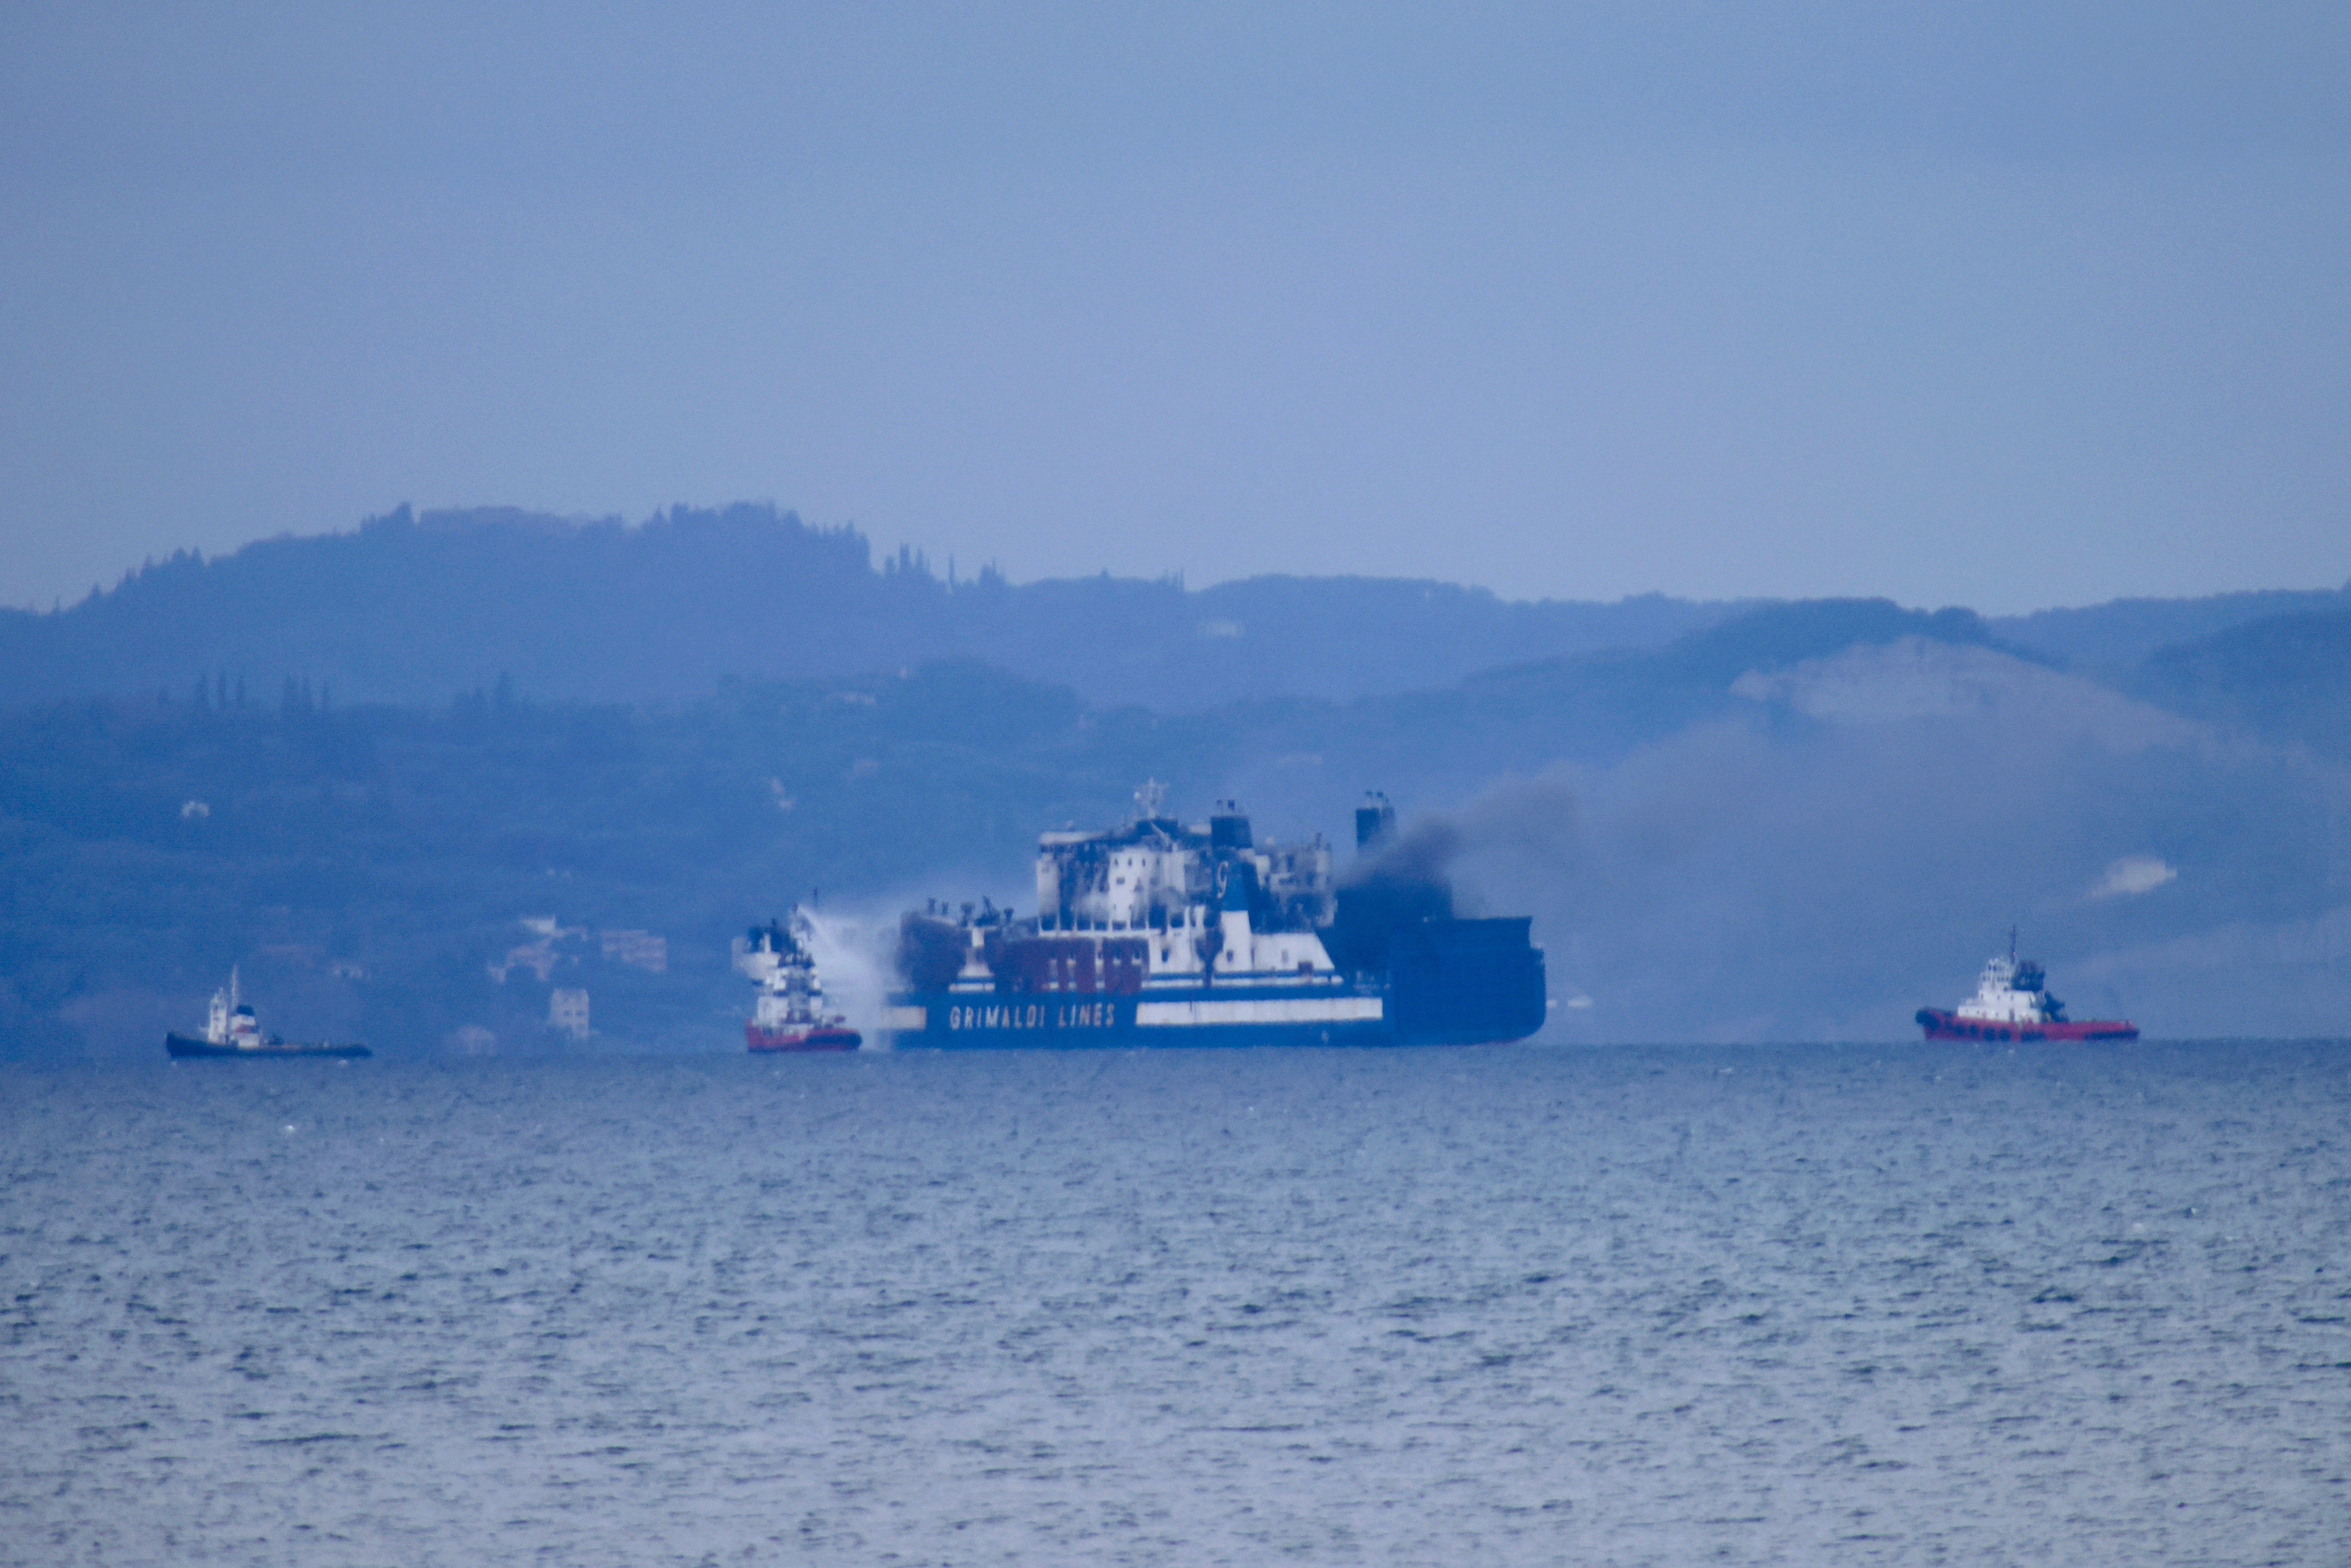 Albania Greece Ferry Fire